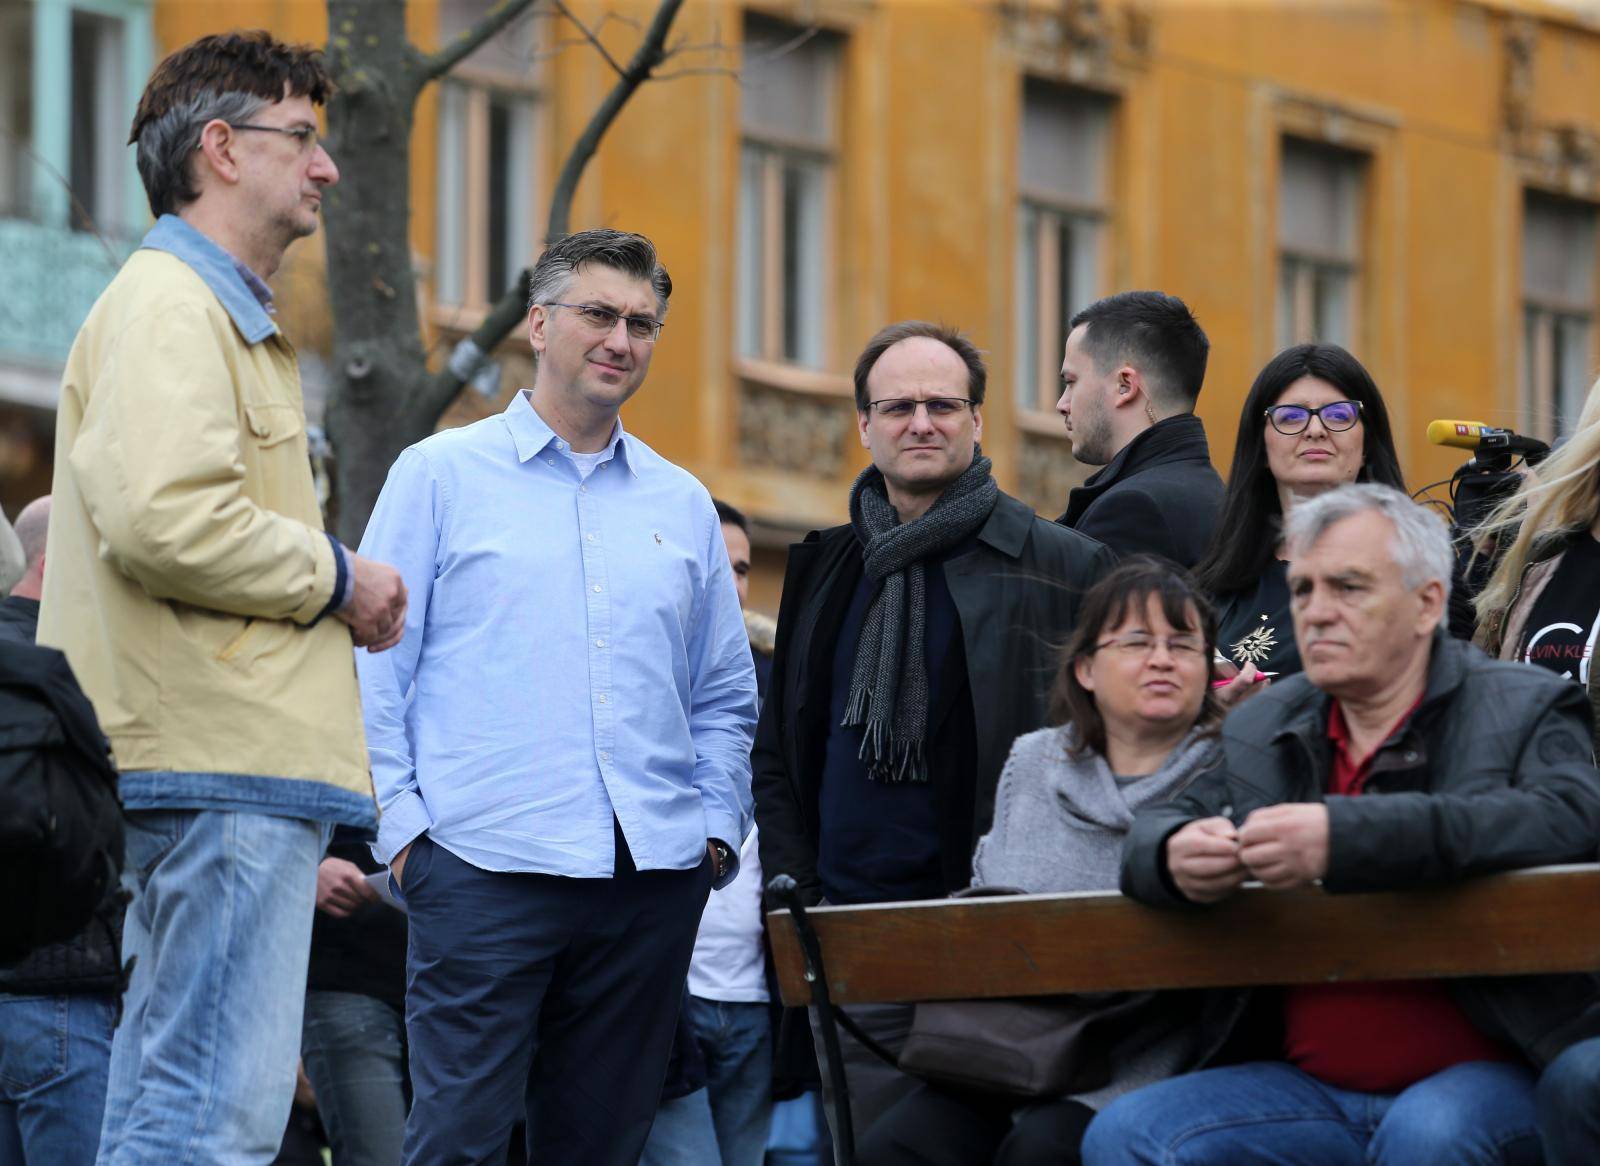 Zagreb: Premijer PlenoviÄ doÅ¡ao na prosvijed protiv nasilja #SPASIME